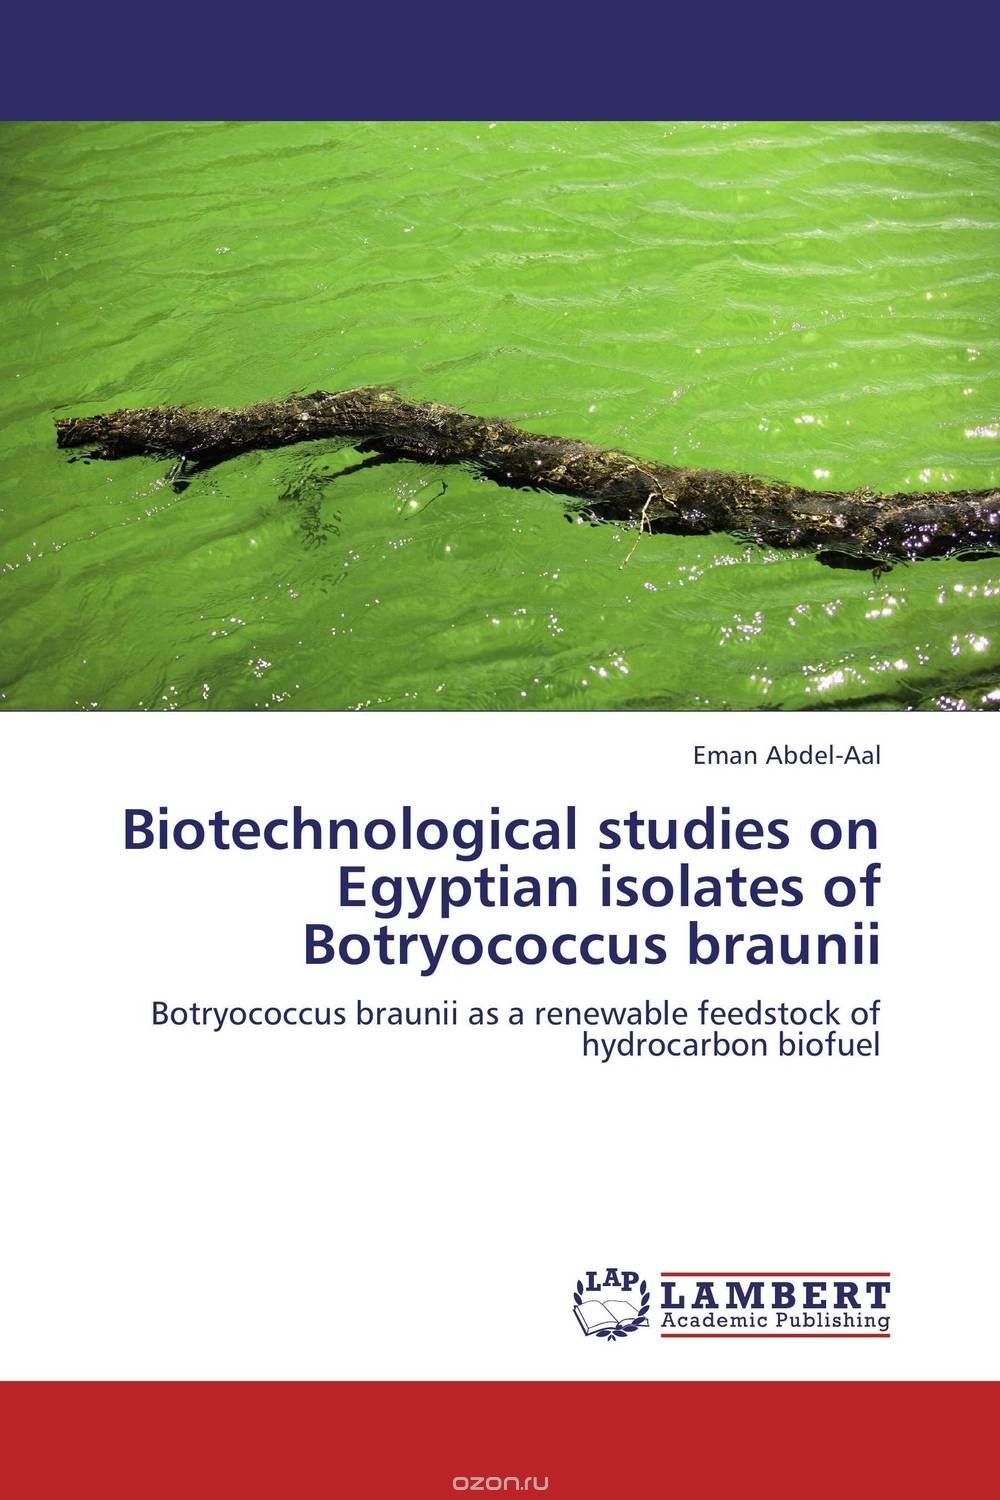 Скачать книгу "Biotechnological studies on Egyptian isolates of Botryococcus braunii"